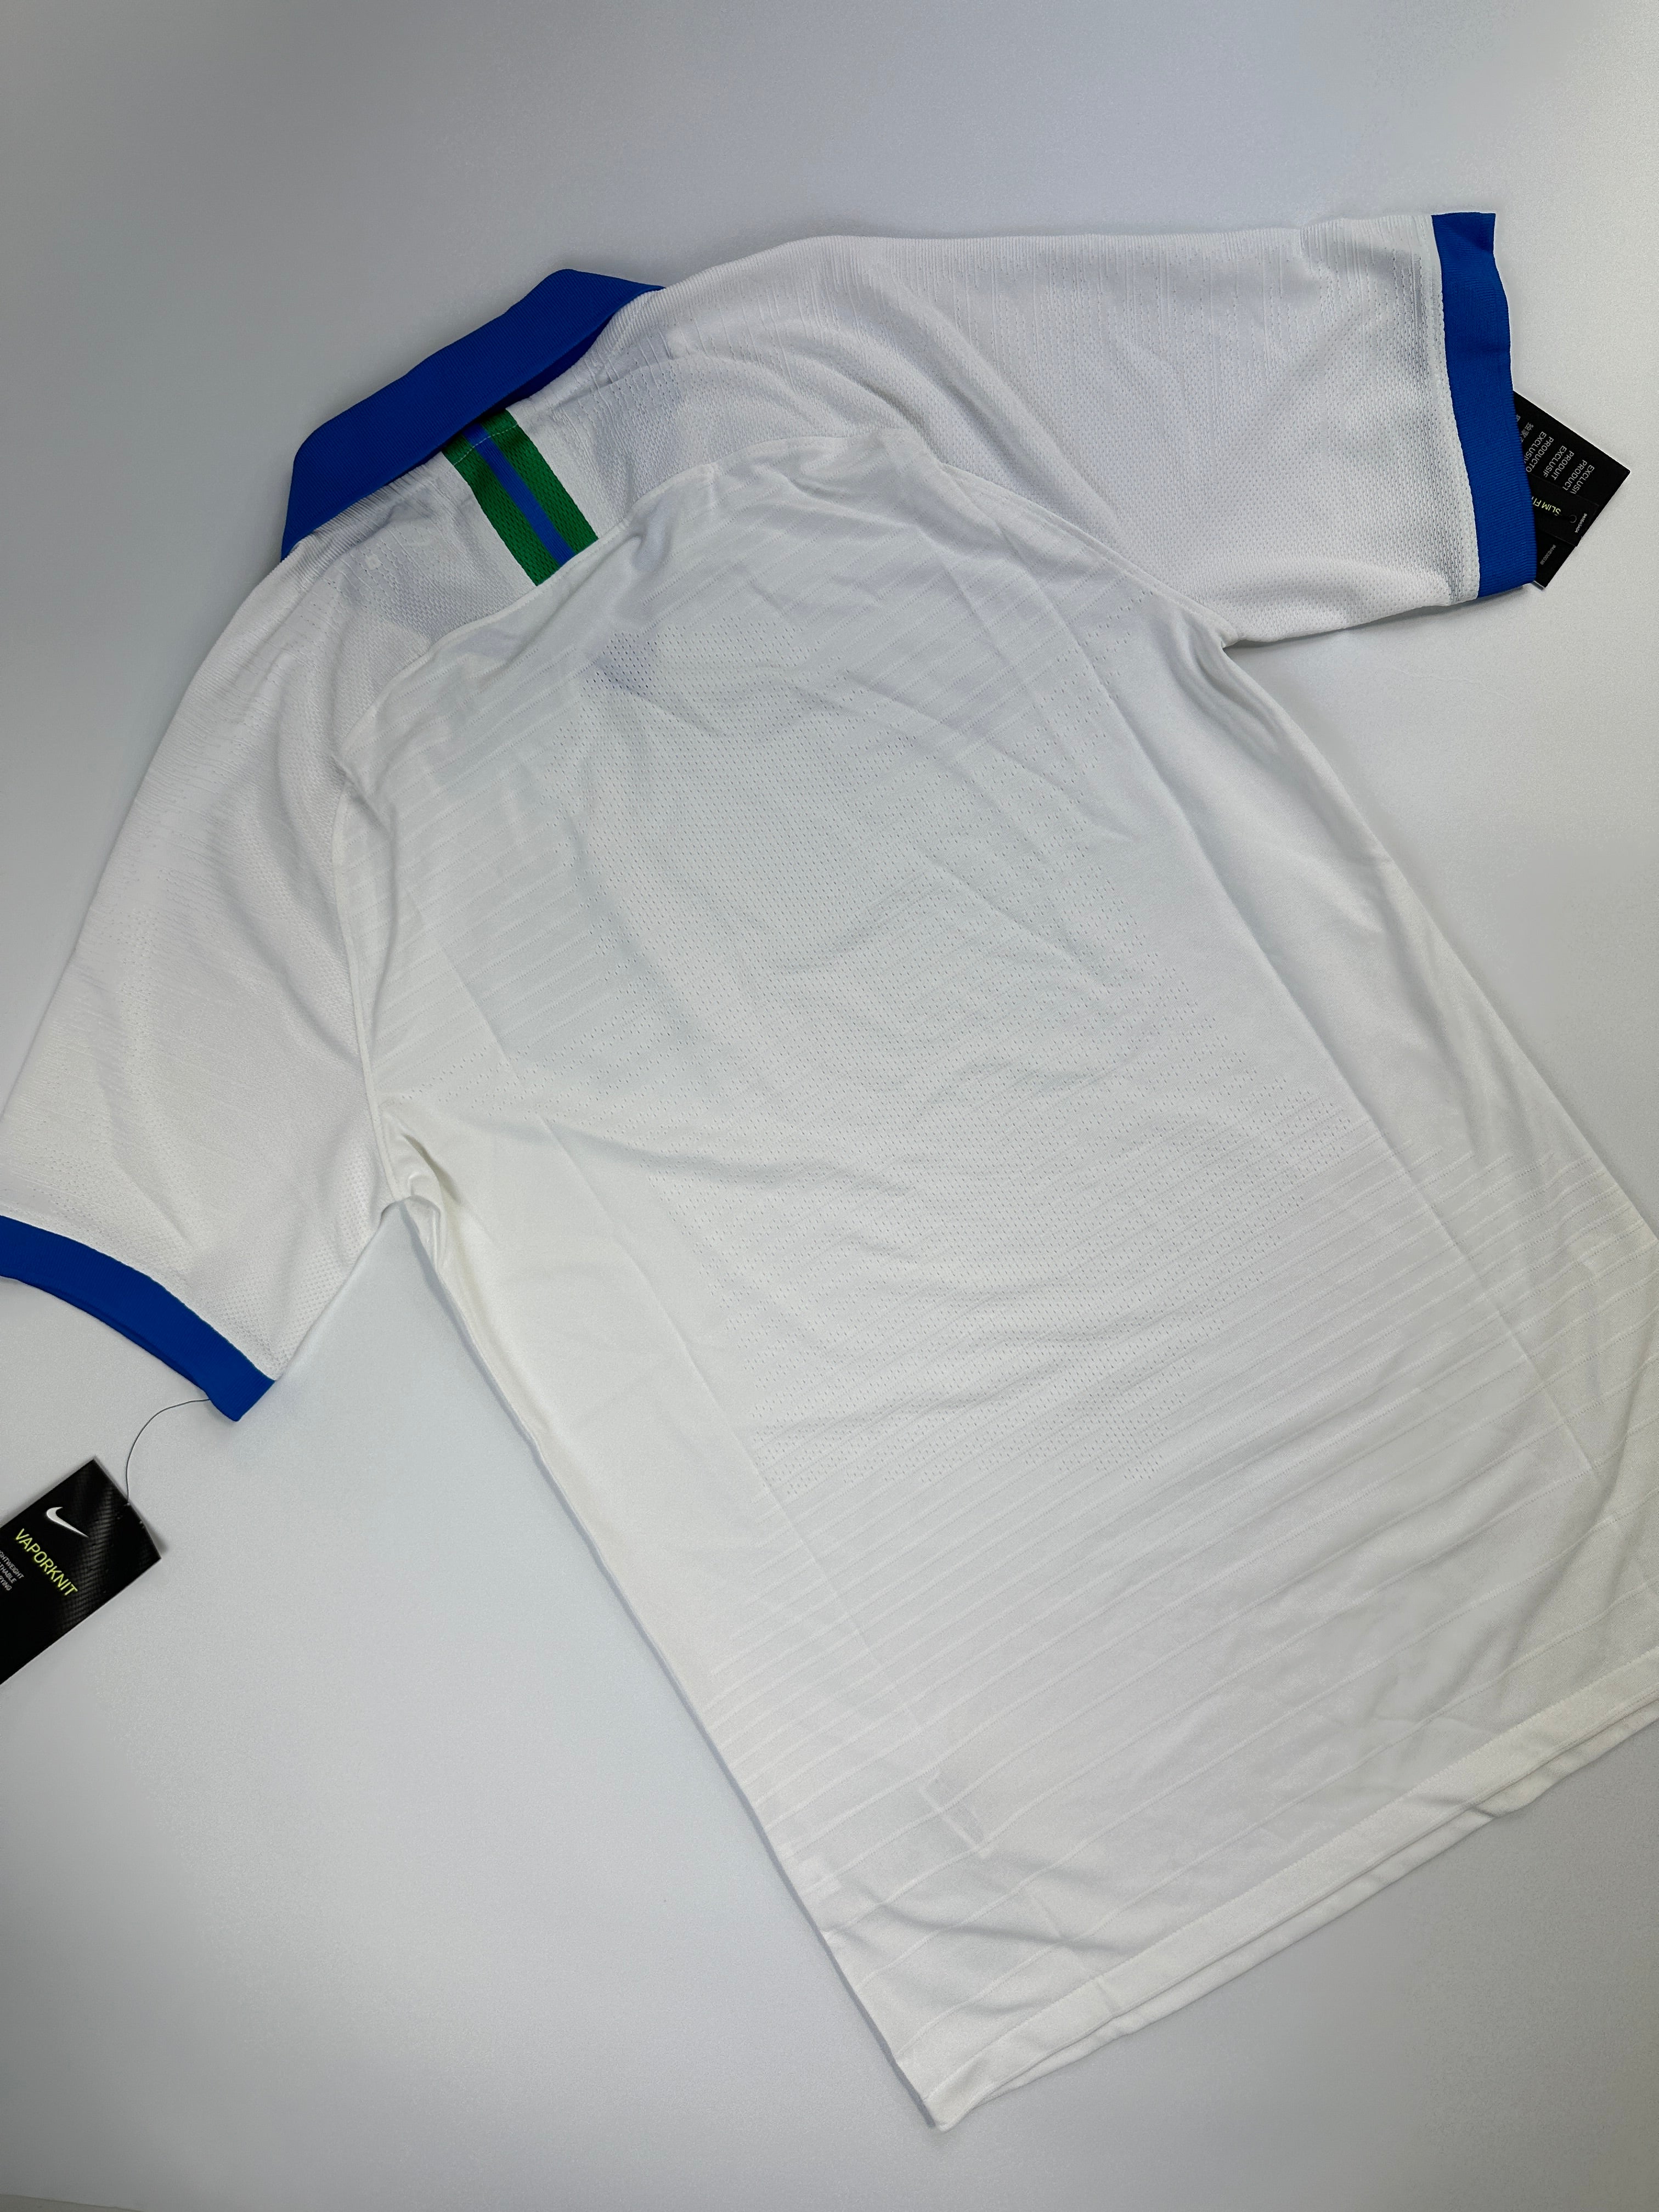 Brazil Away Shirt 2019 Authentic